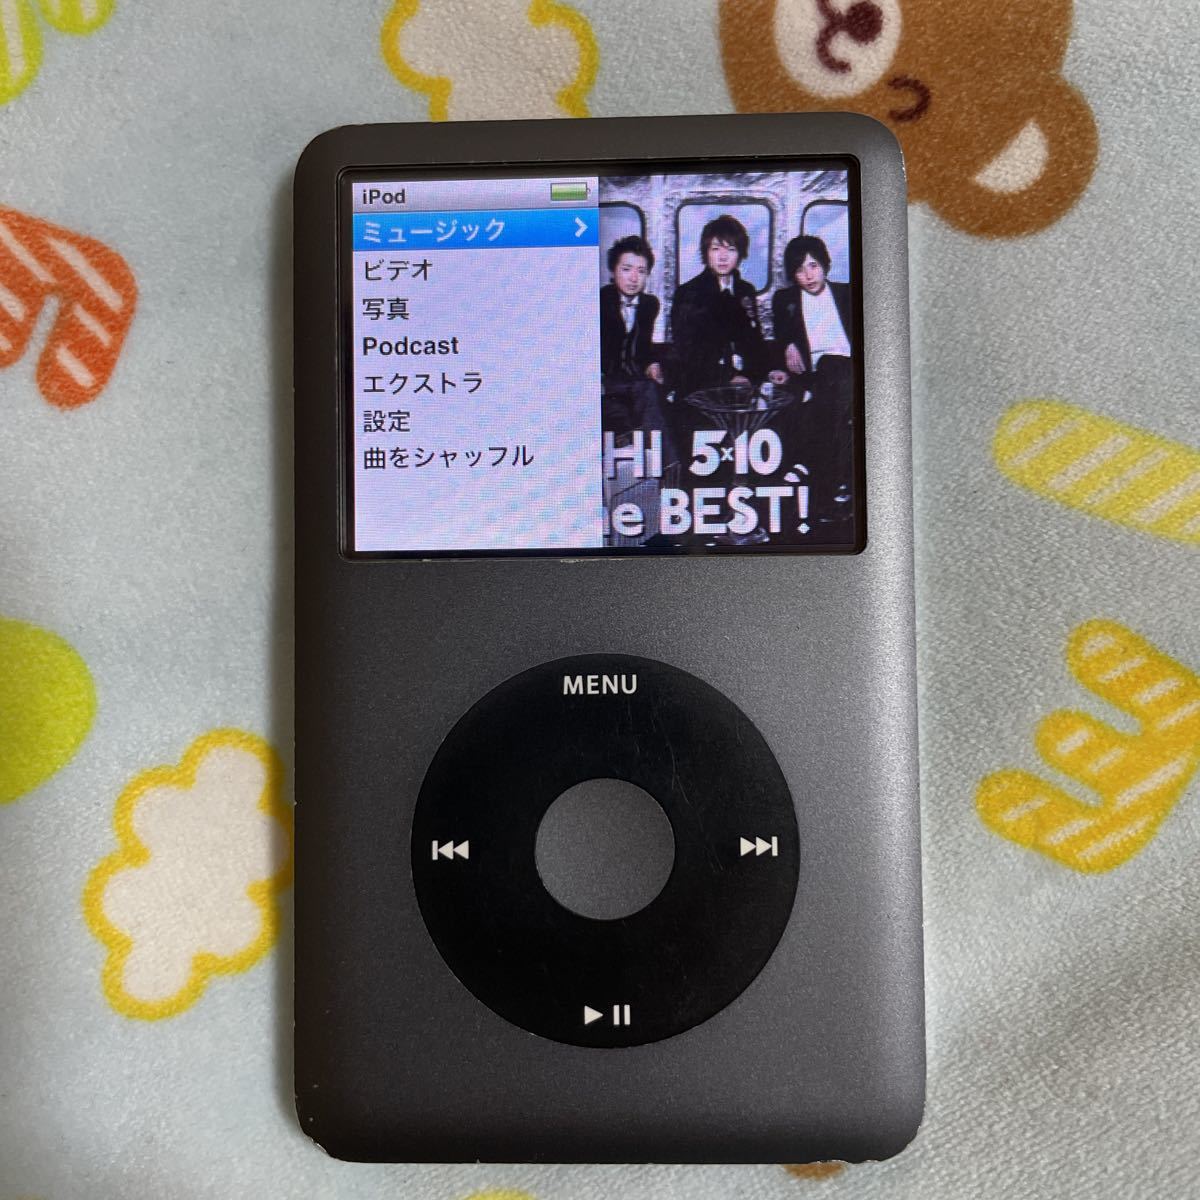 雅虎代拍-- Apple iPod classic 160GB